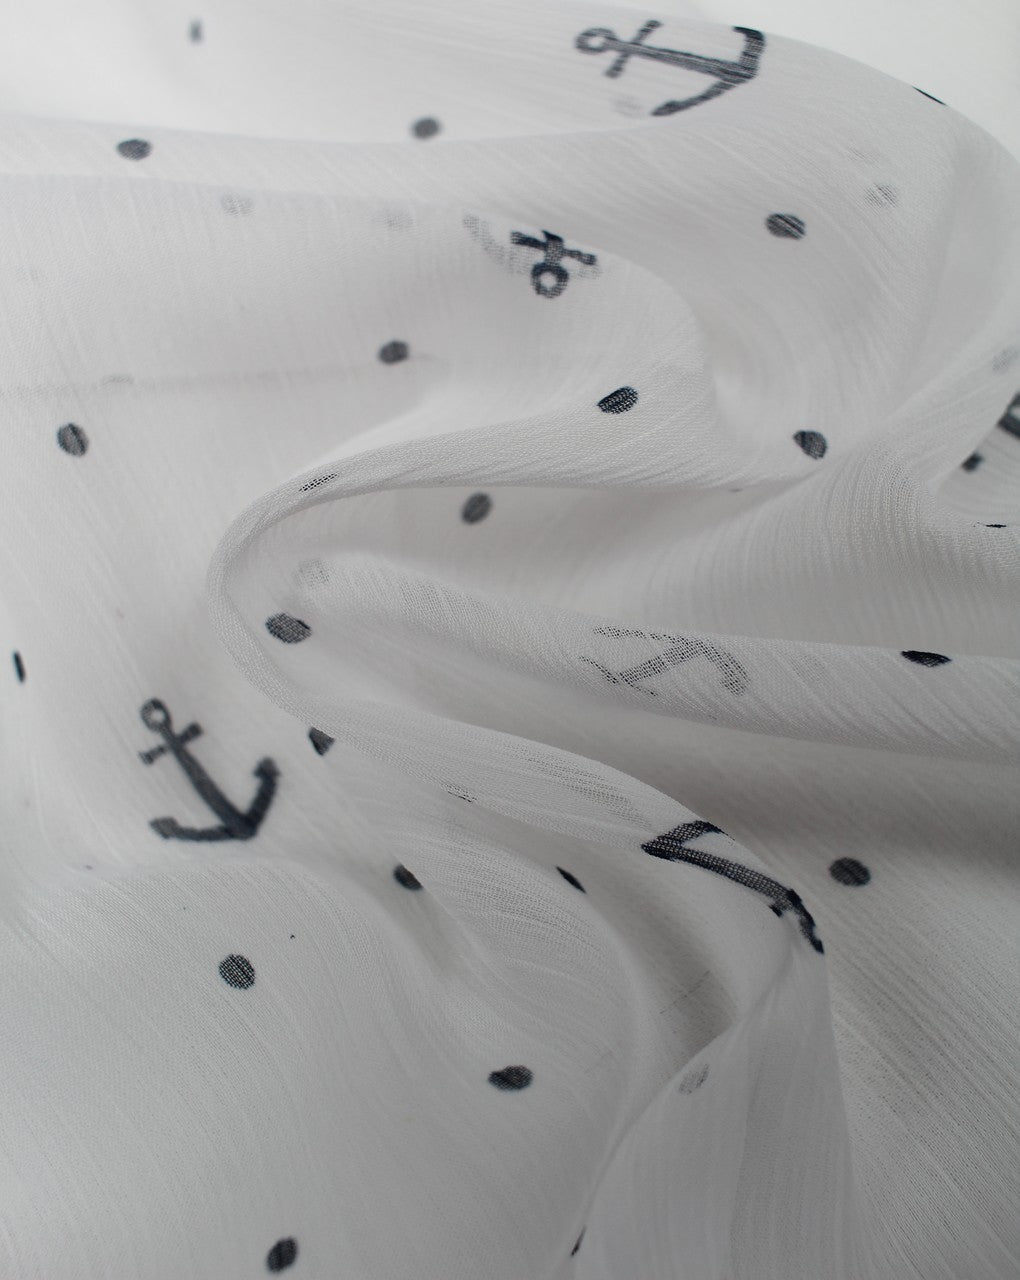 White And Black Polka Dots Print Polyester Chiffon Fabric